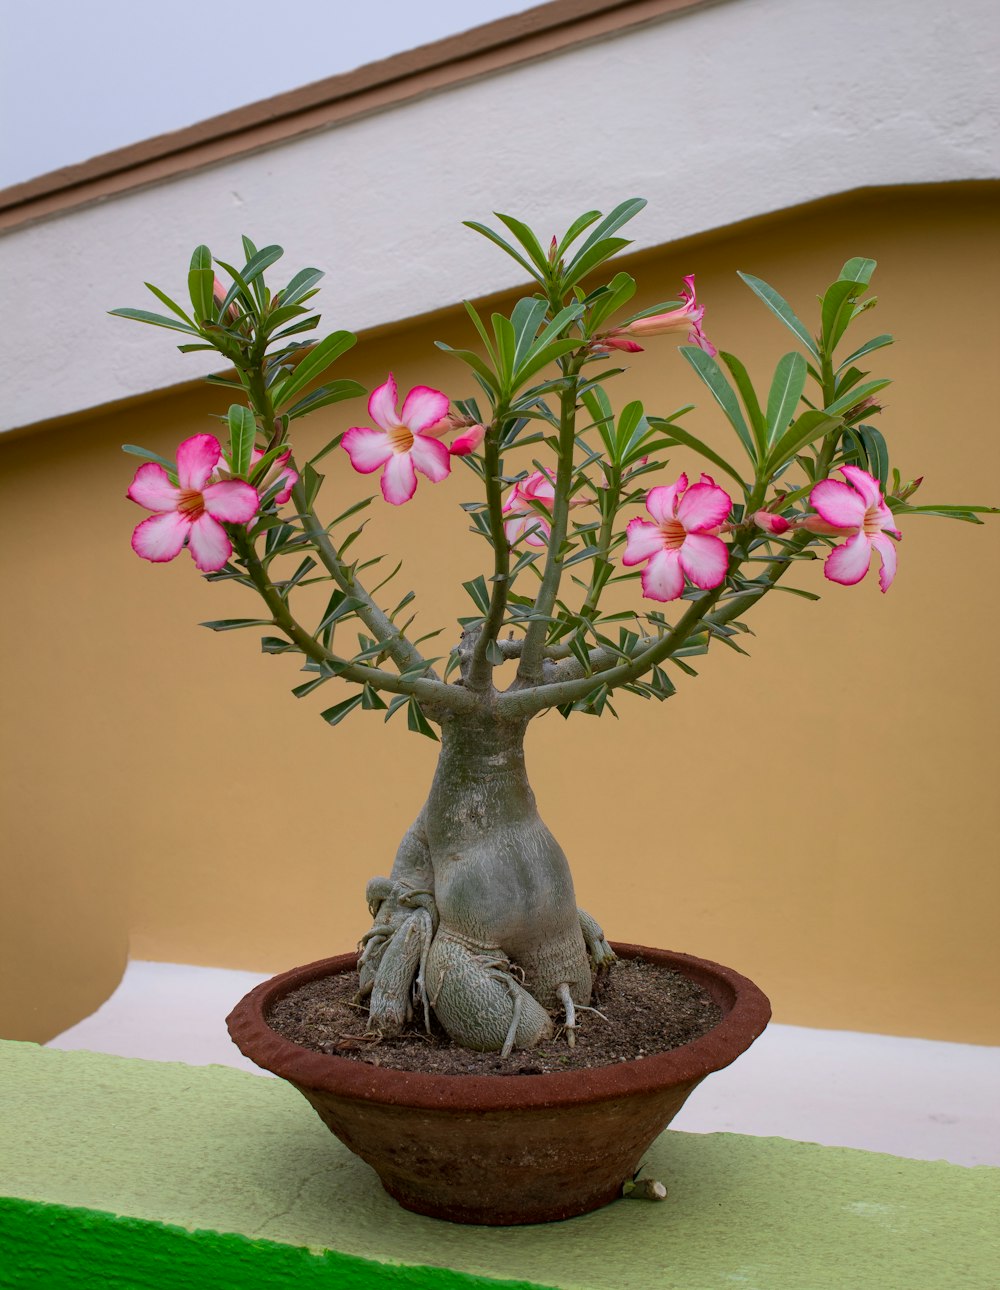 Un pequeño árbol con flores rosadas